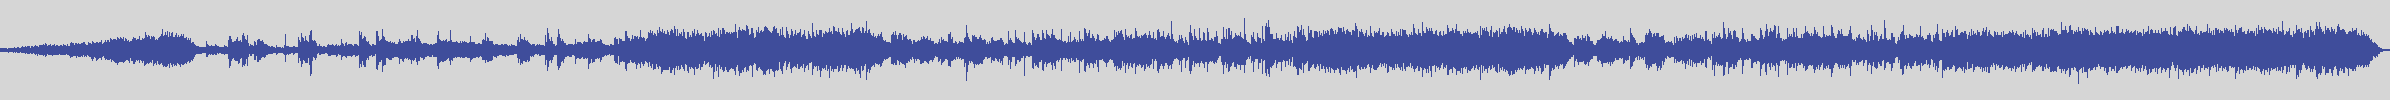 digiphonic_records [DPR013] Little Tony - La Mano Del Signore [Original Mix] audio wave form